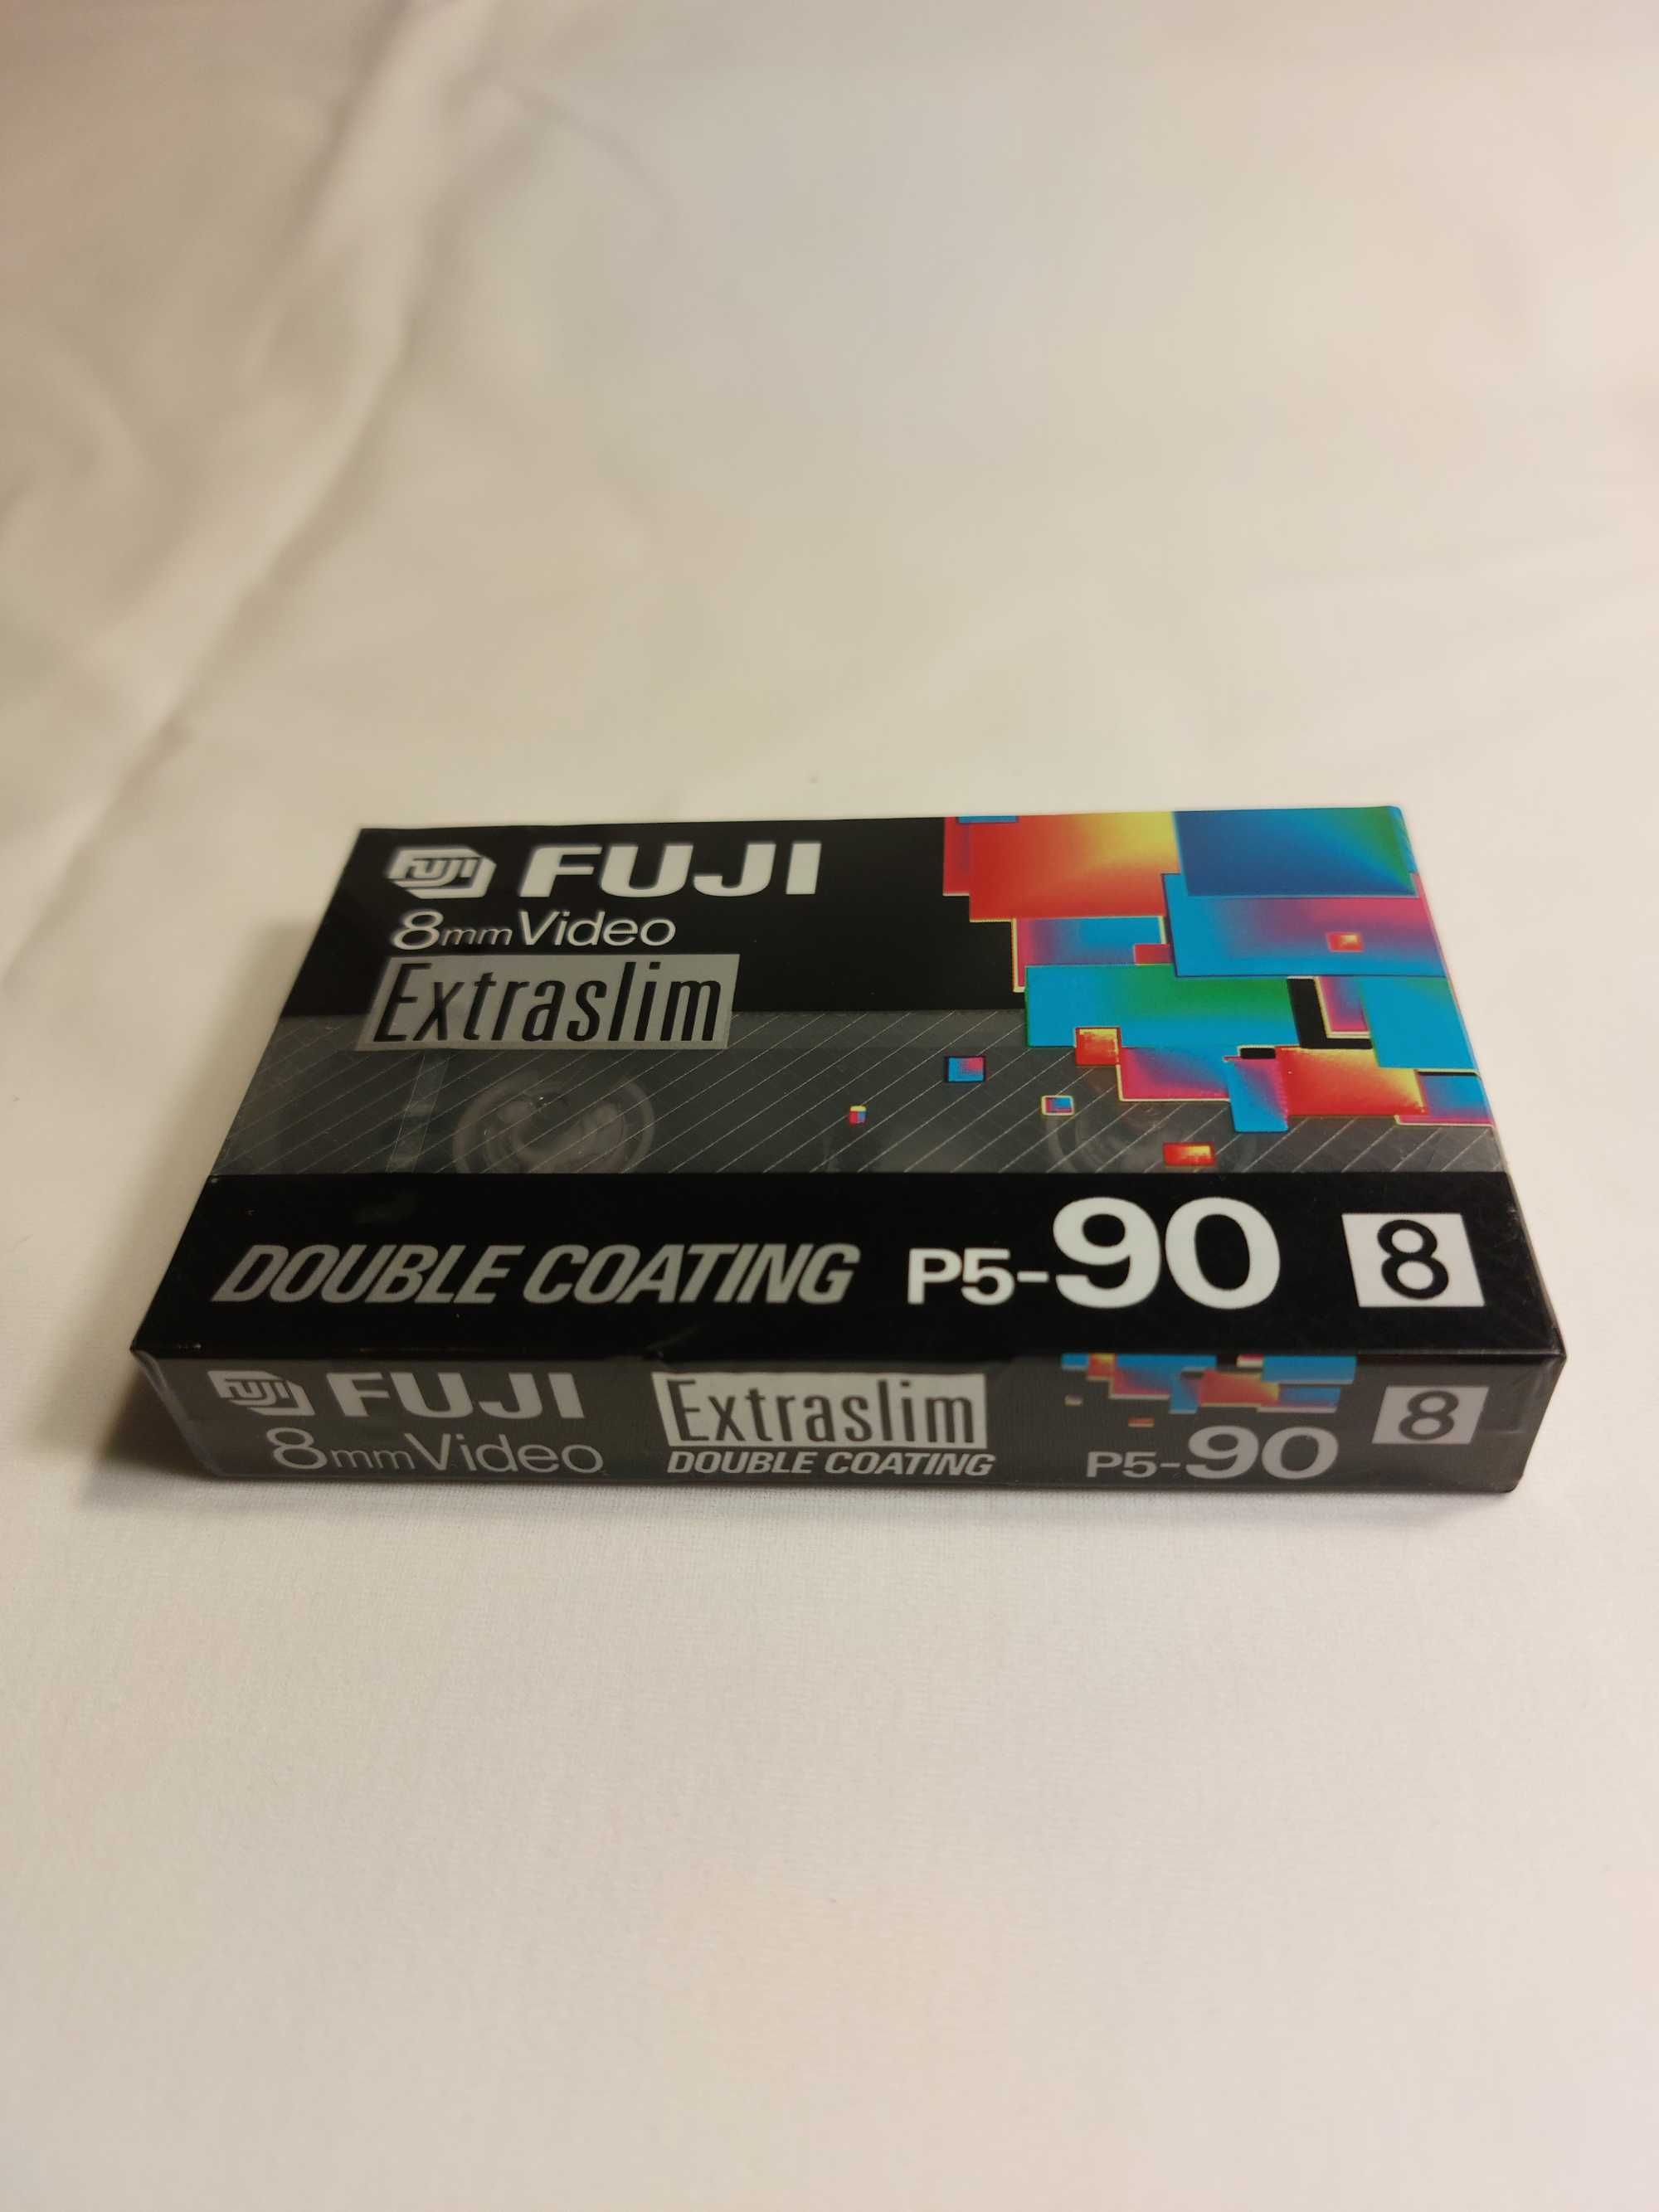 Caseta 8mm fuji extraslim p5 90 original japan